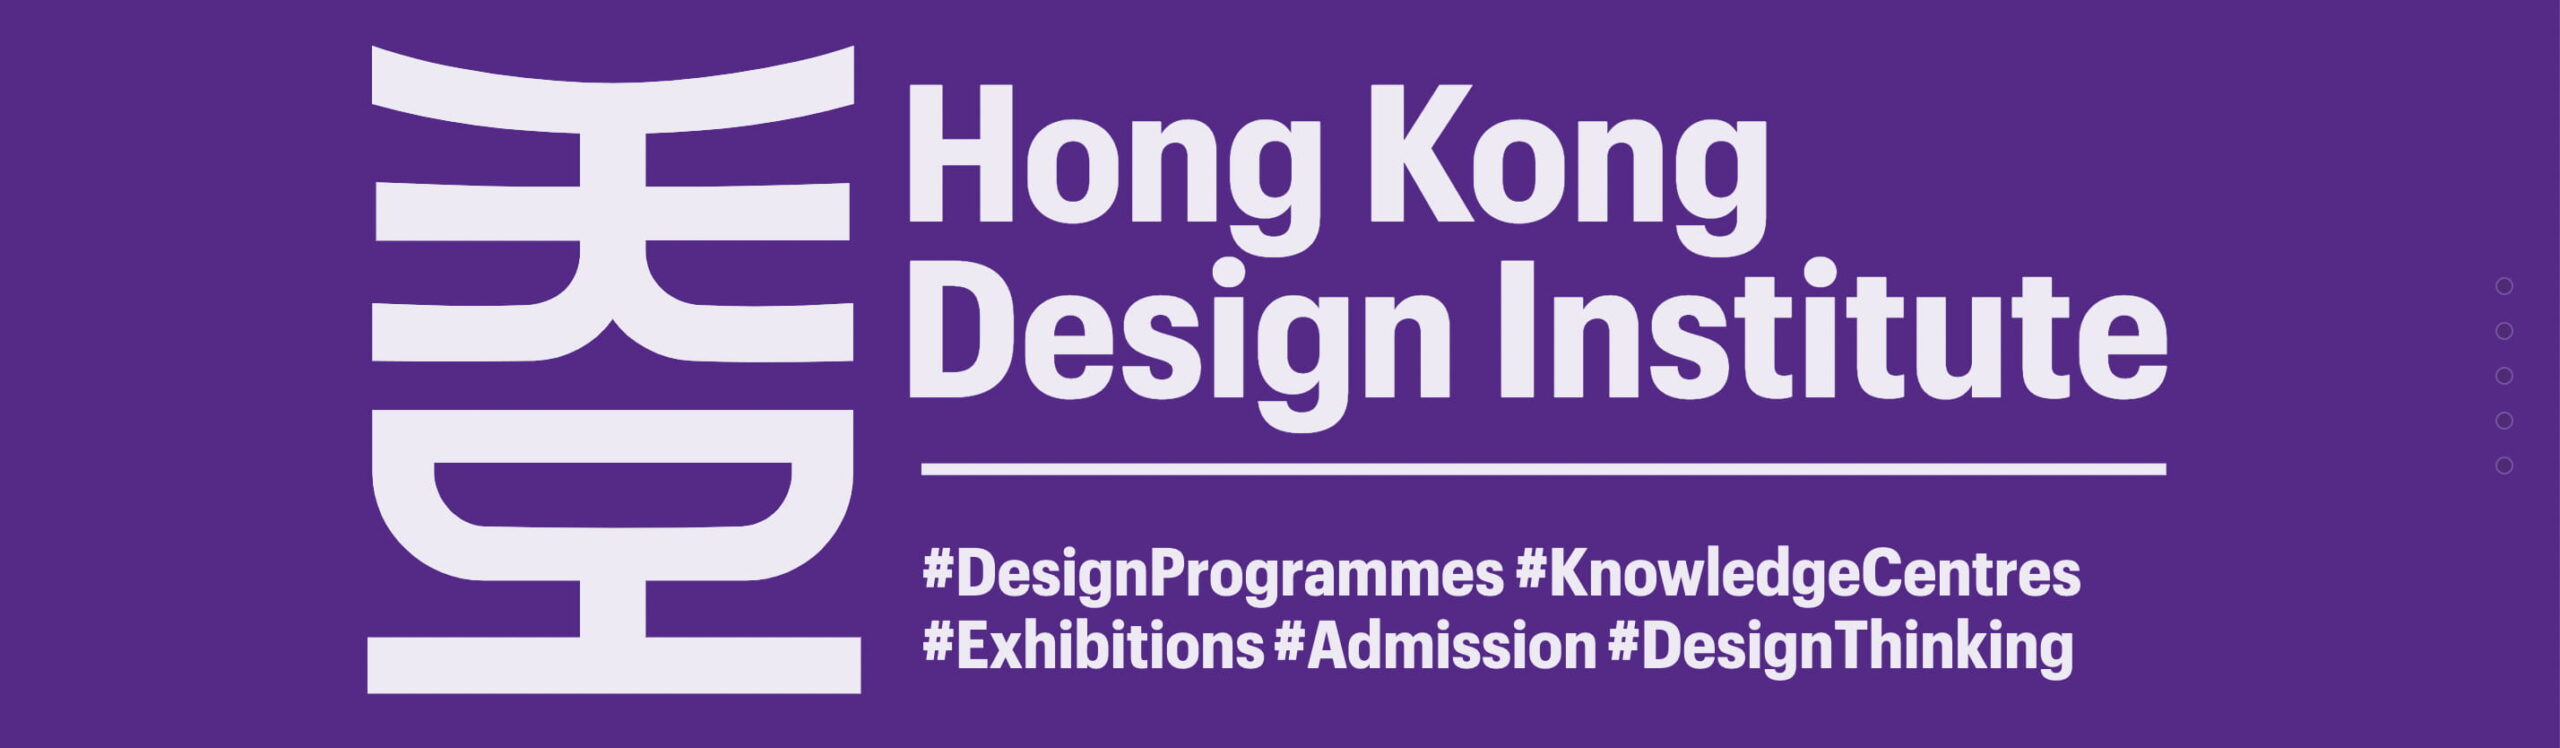 A screenshot from the Hong Kong Design Institute's website, a graphic design school